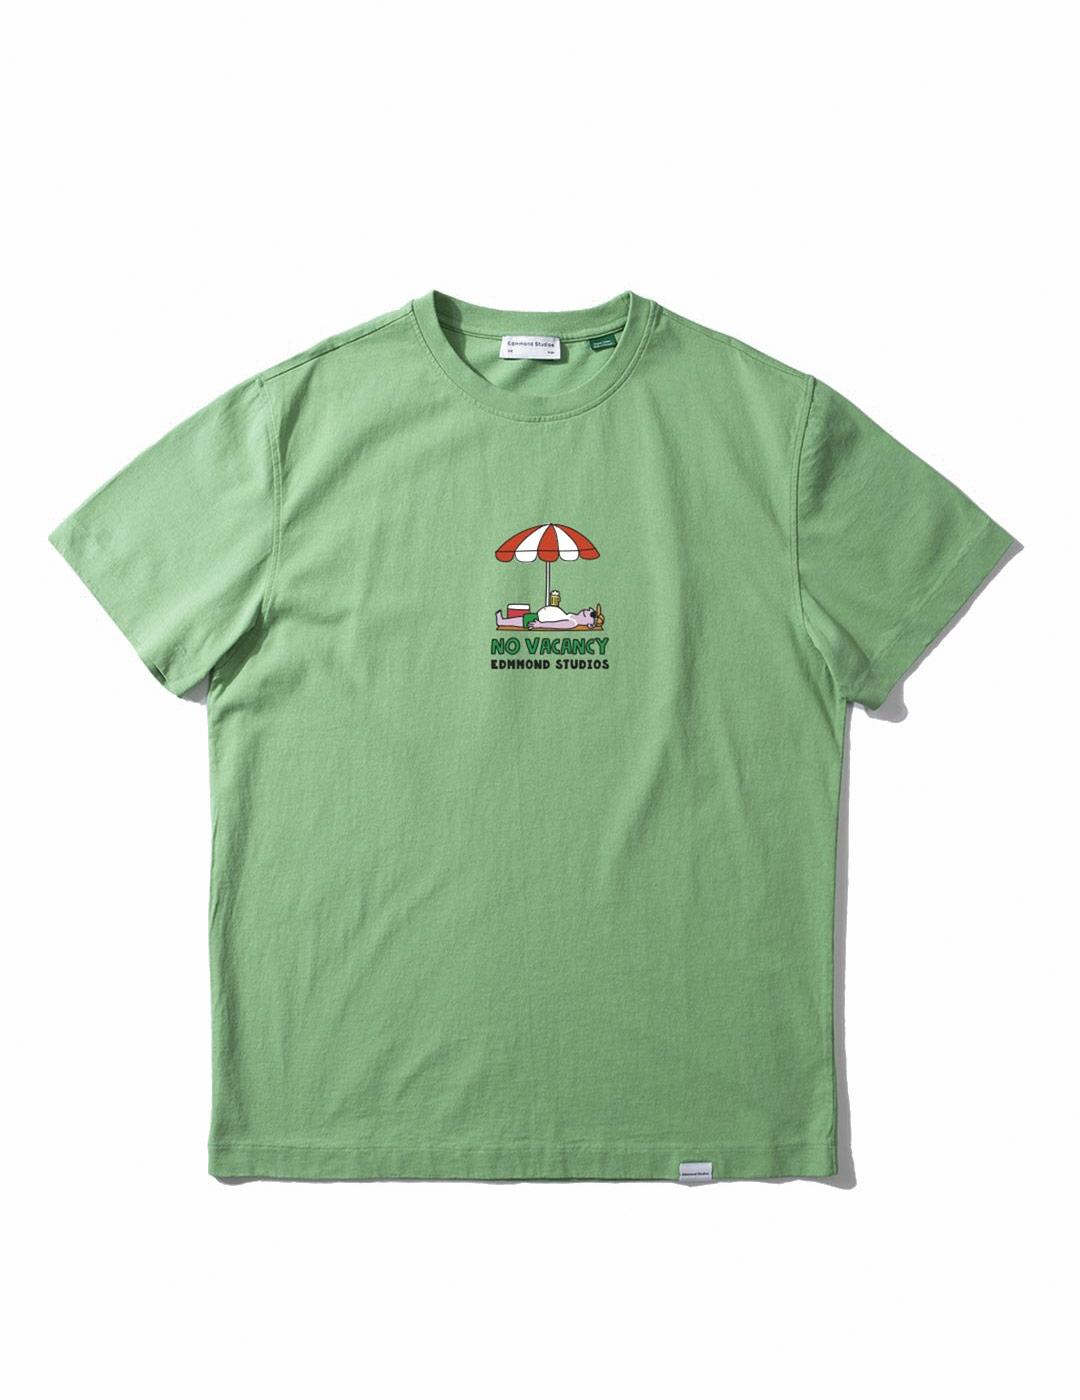 Camiseta Edmmond Studios No Vacancy Umbrella Verde